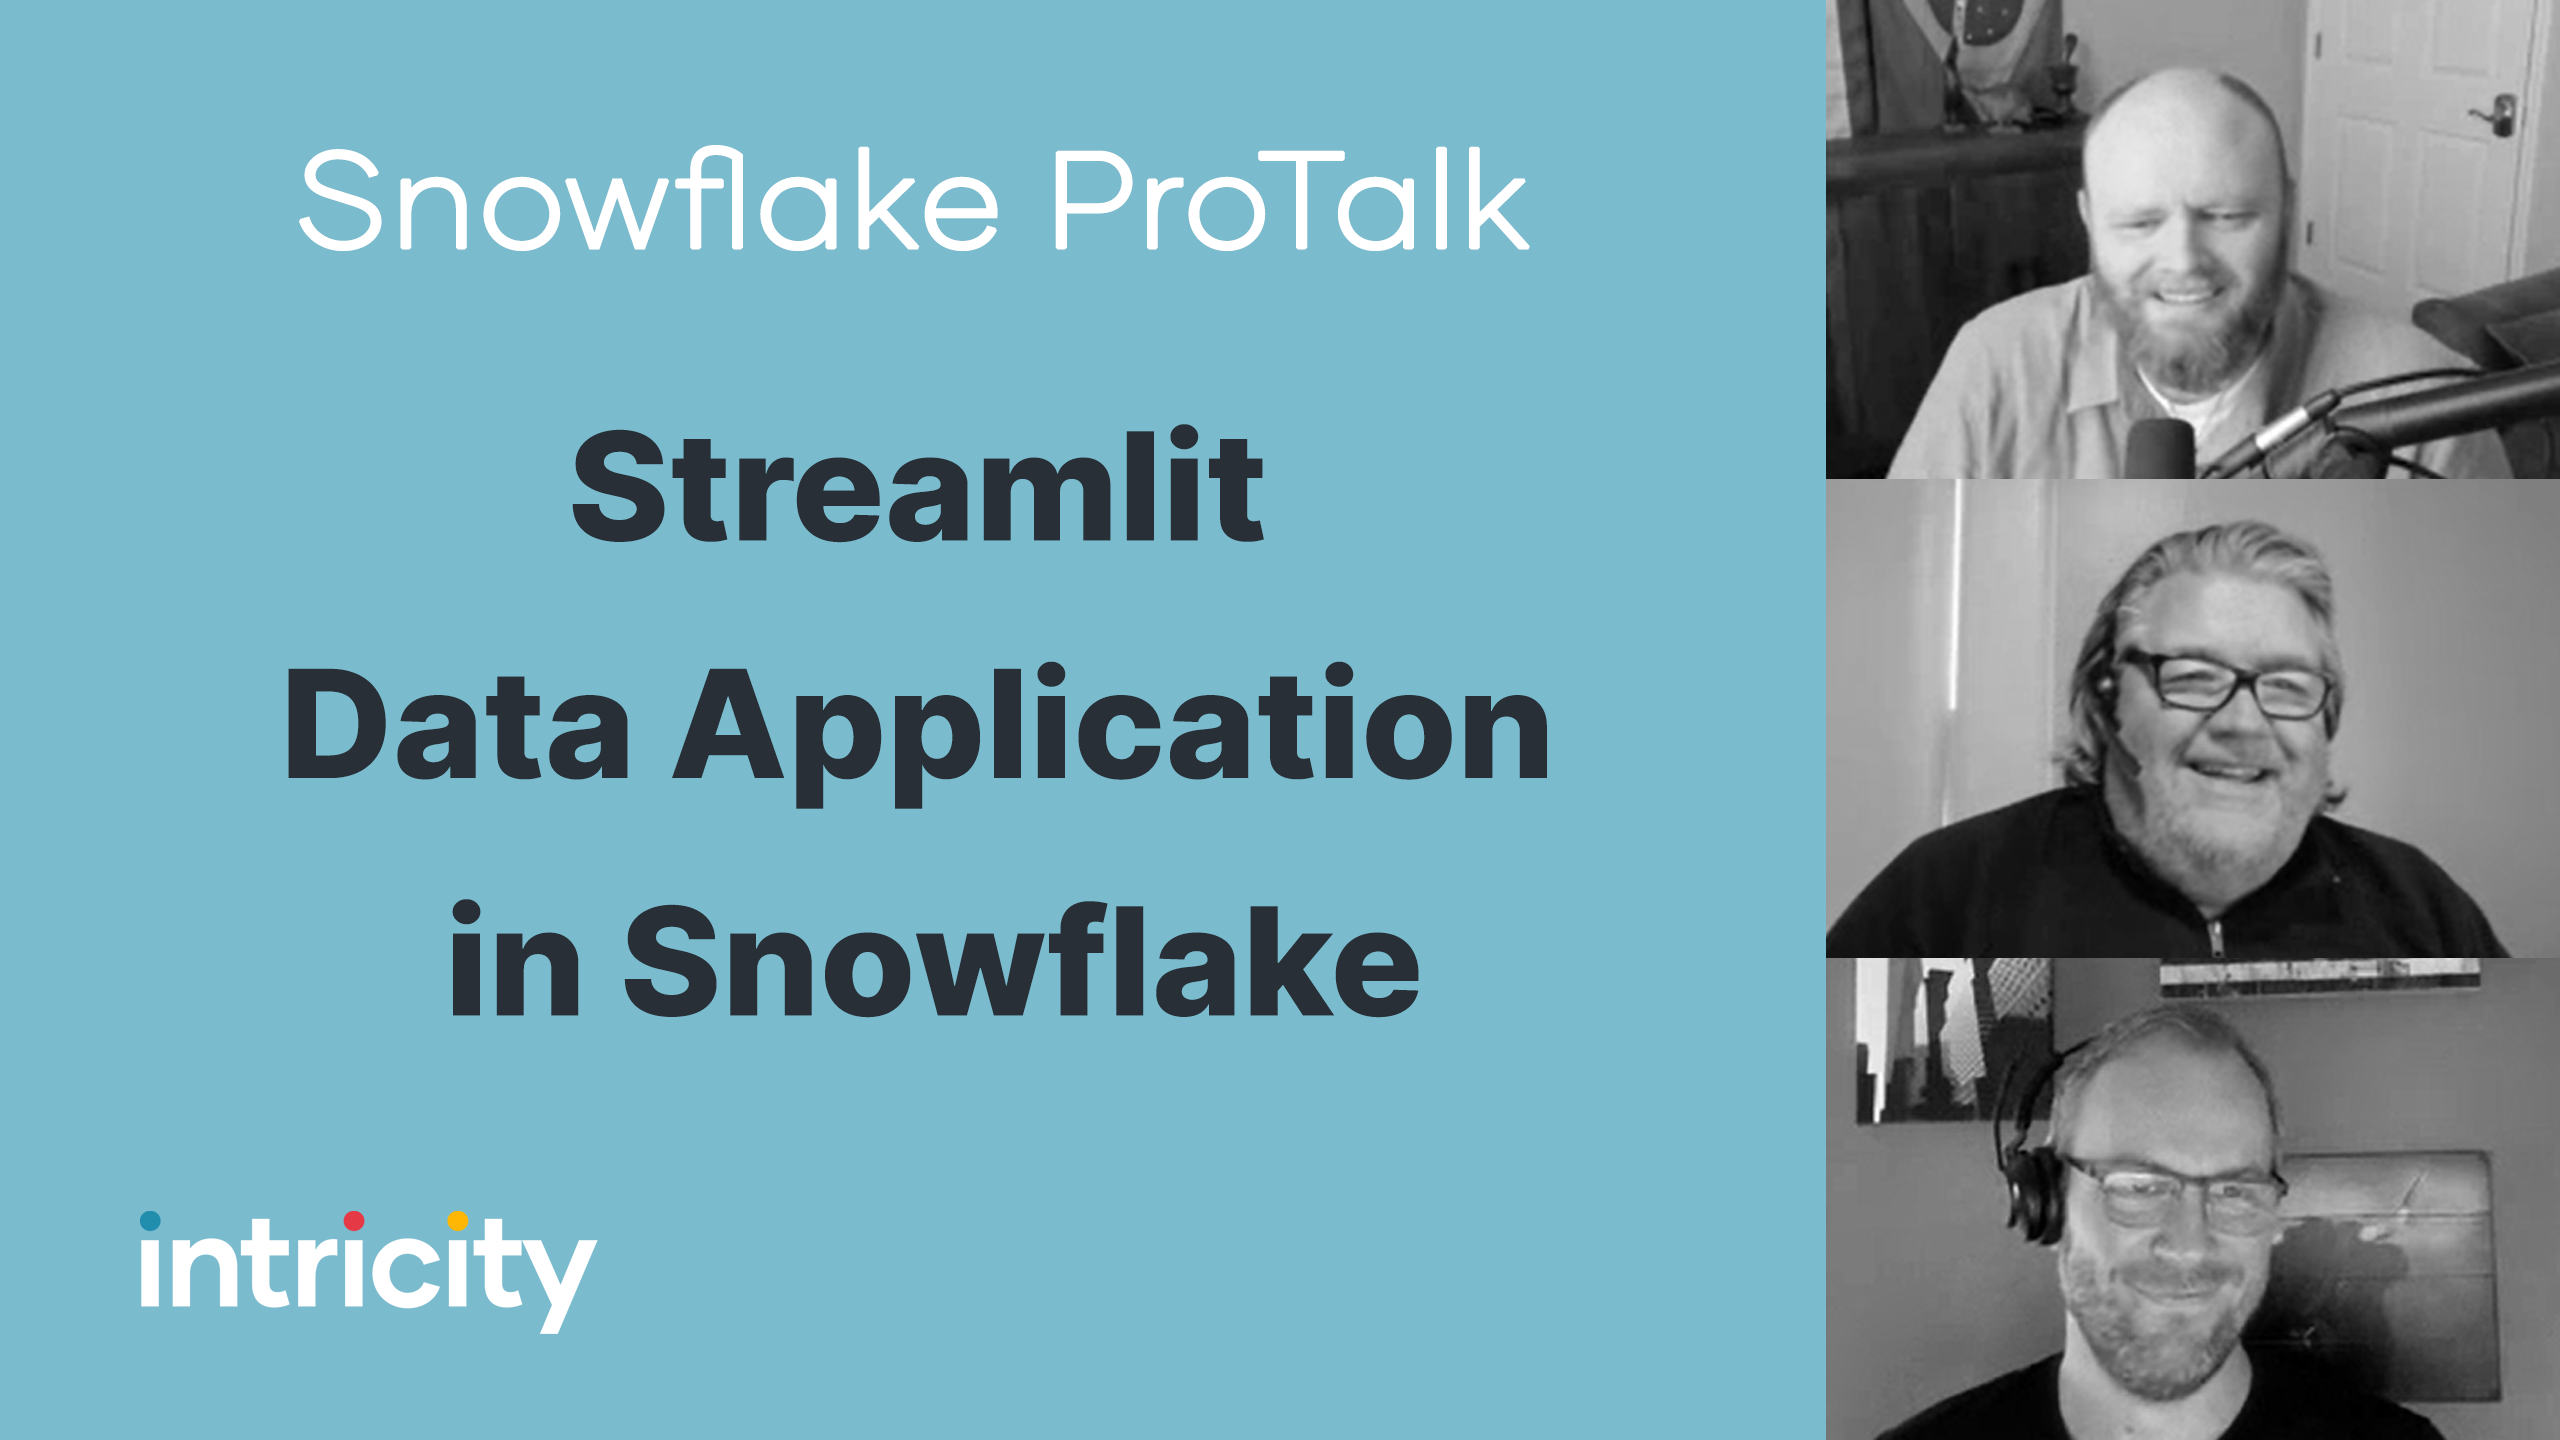 Snowflake ProTalk: Streamlit data application in Snowflake